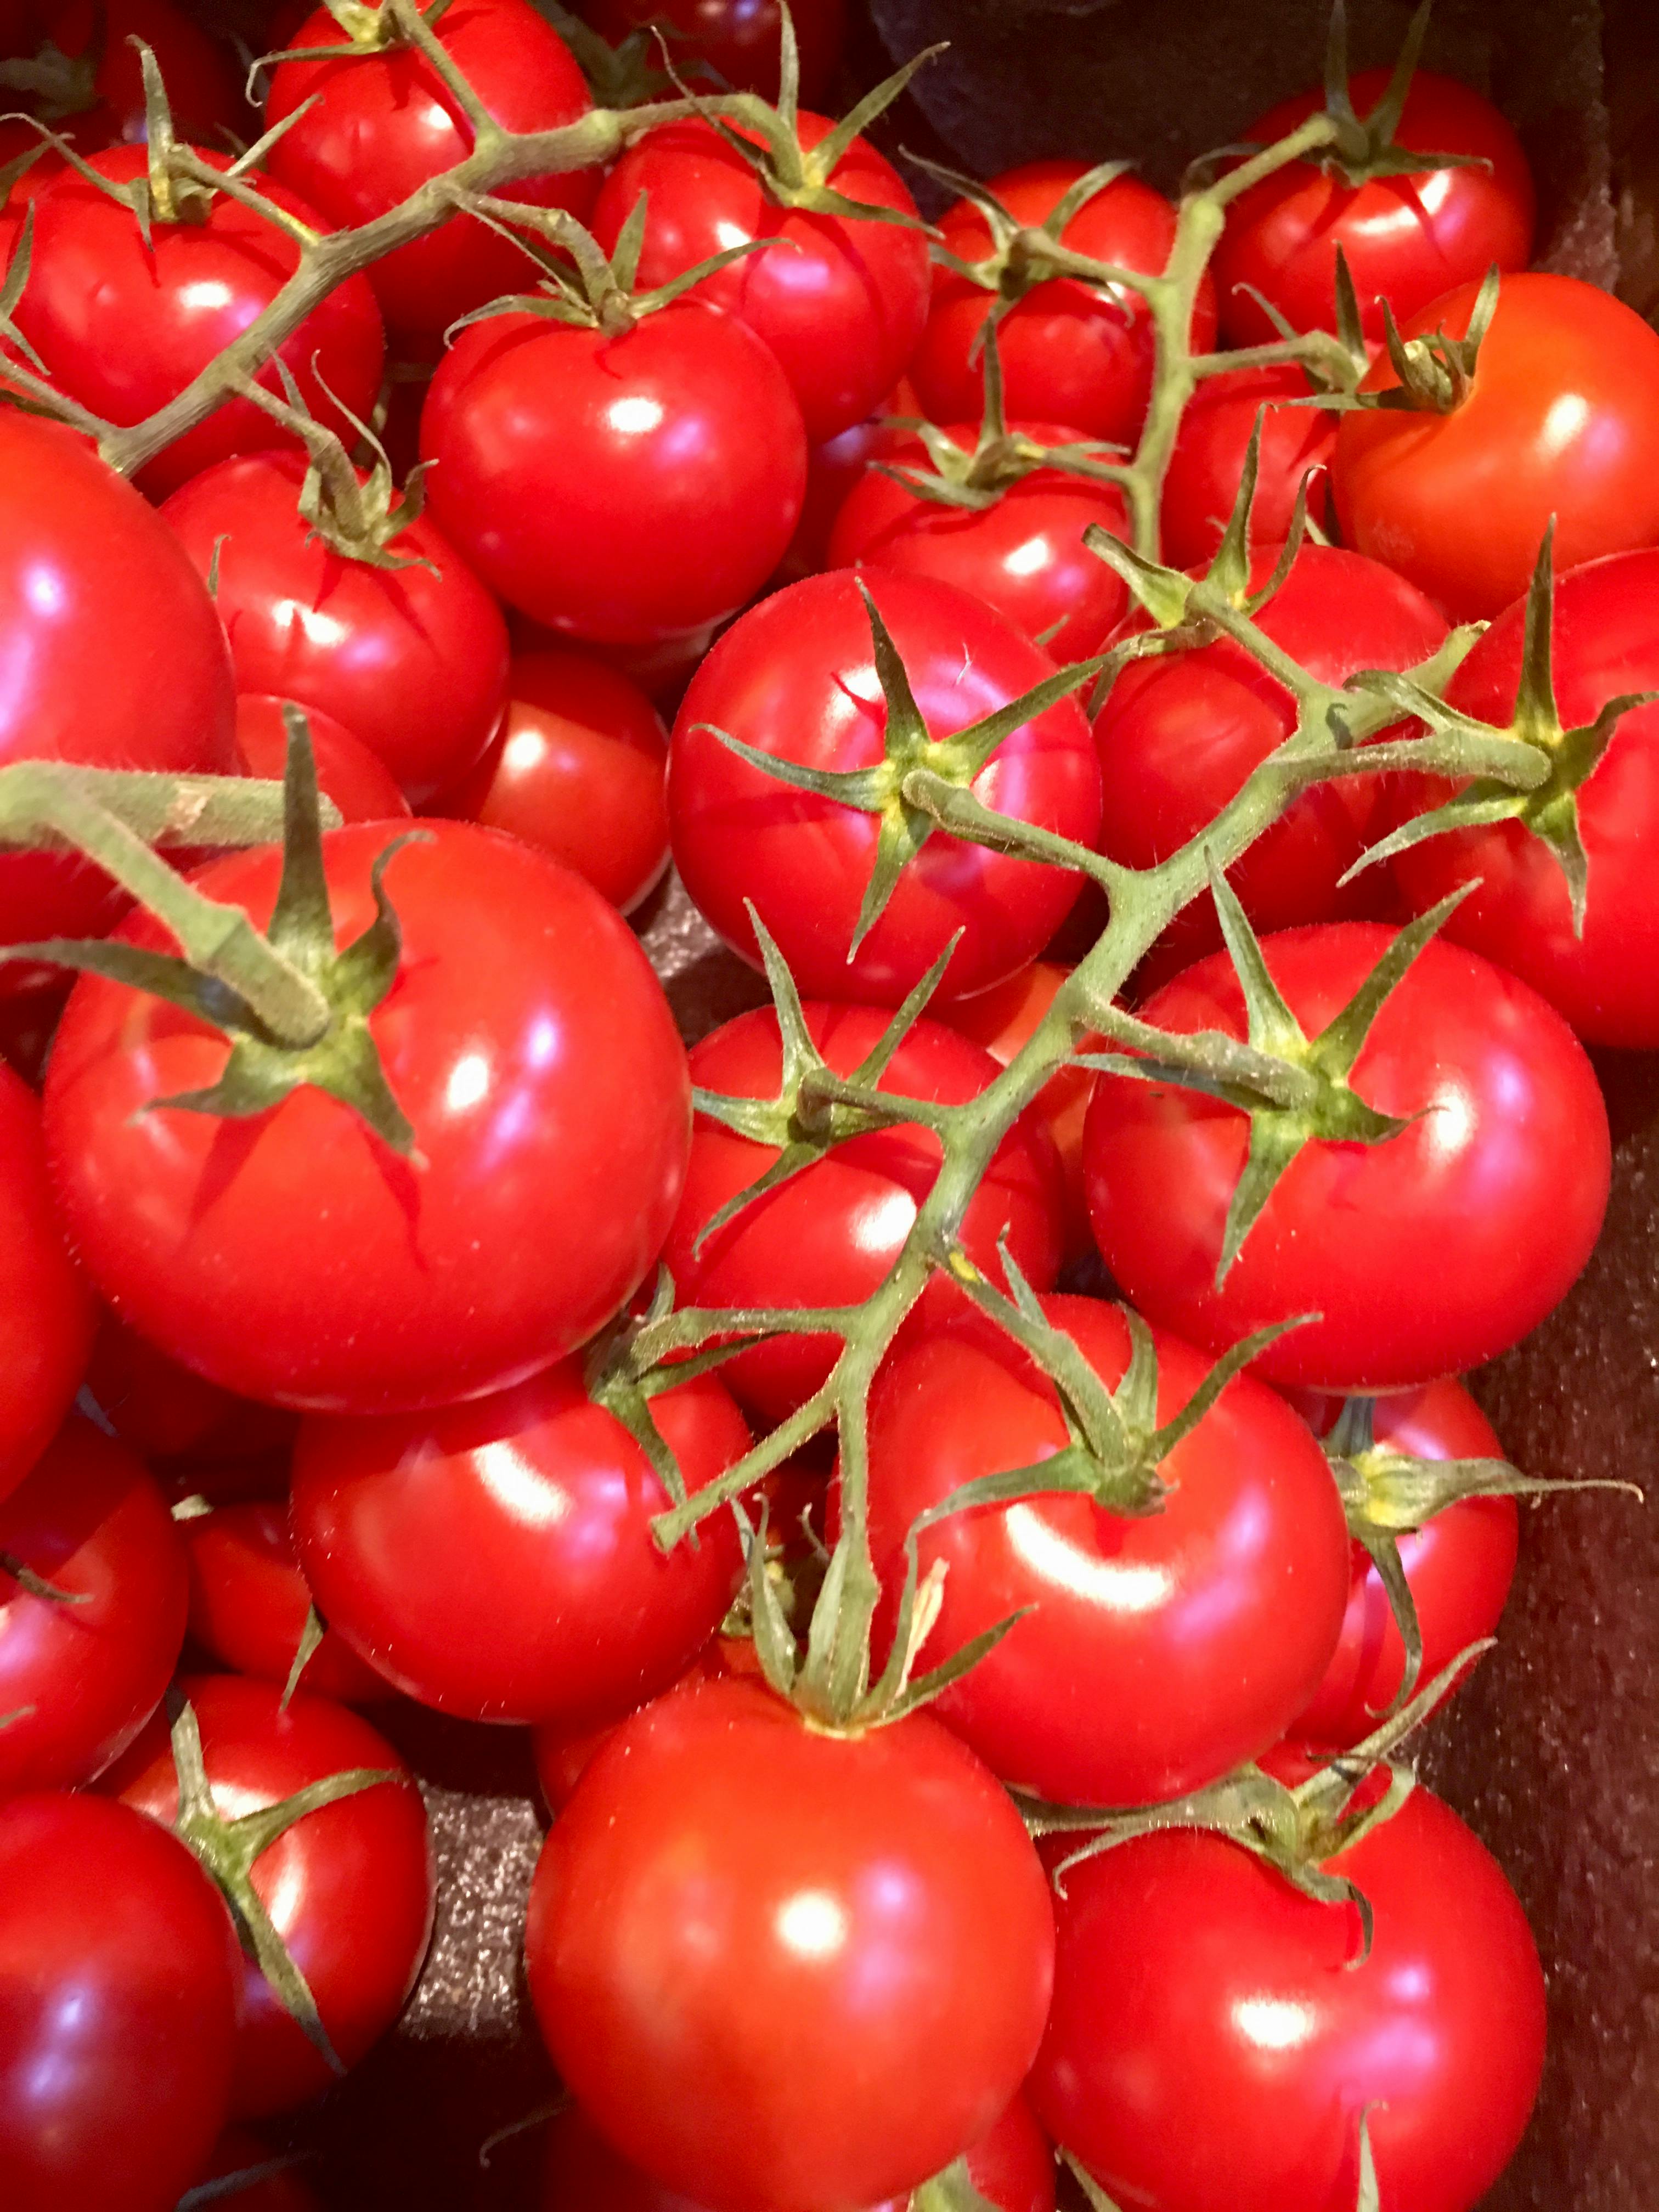 Free stock photo of cherry tomatoes, tomatoes, tomatoes on vine